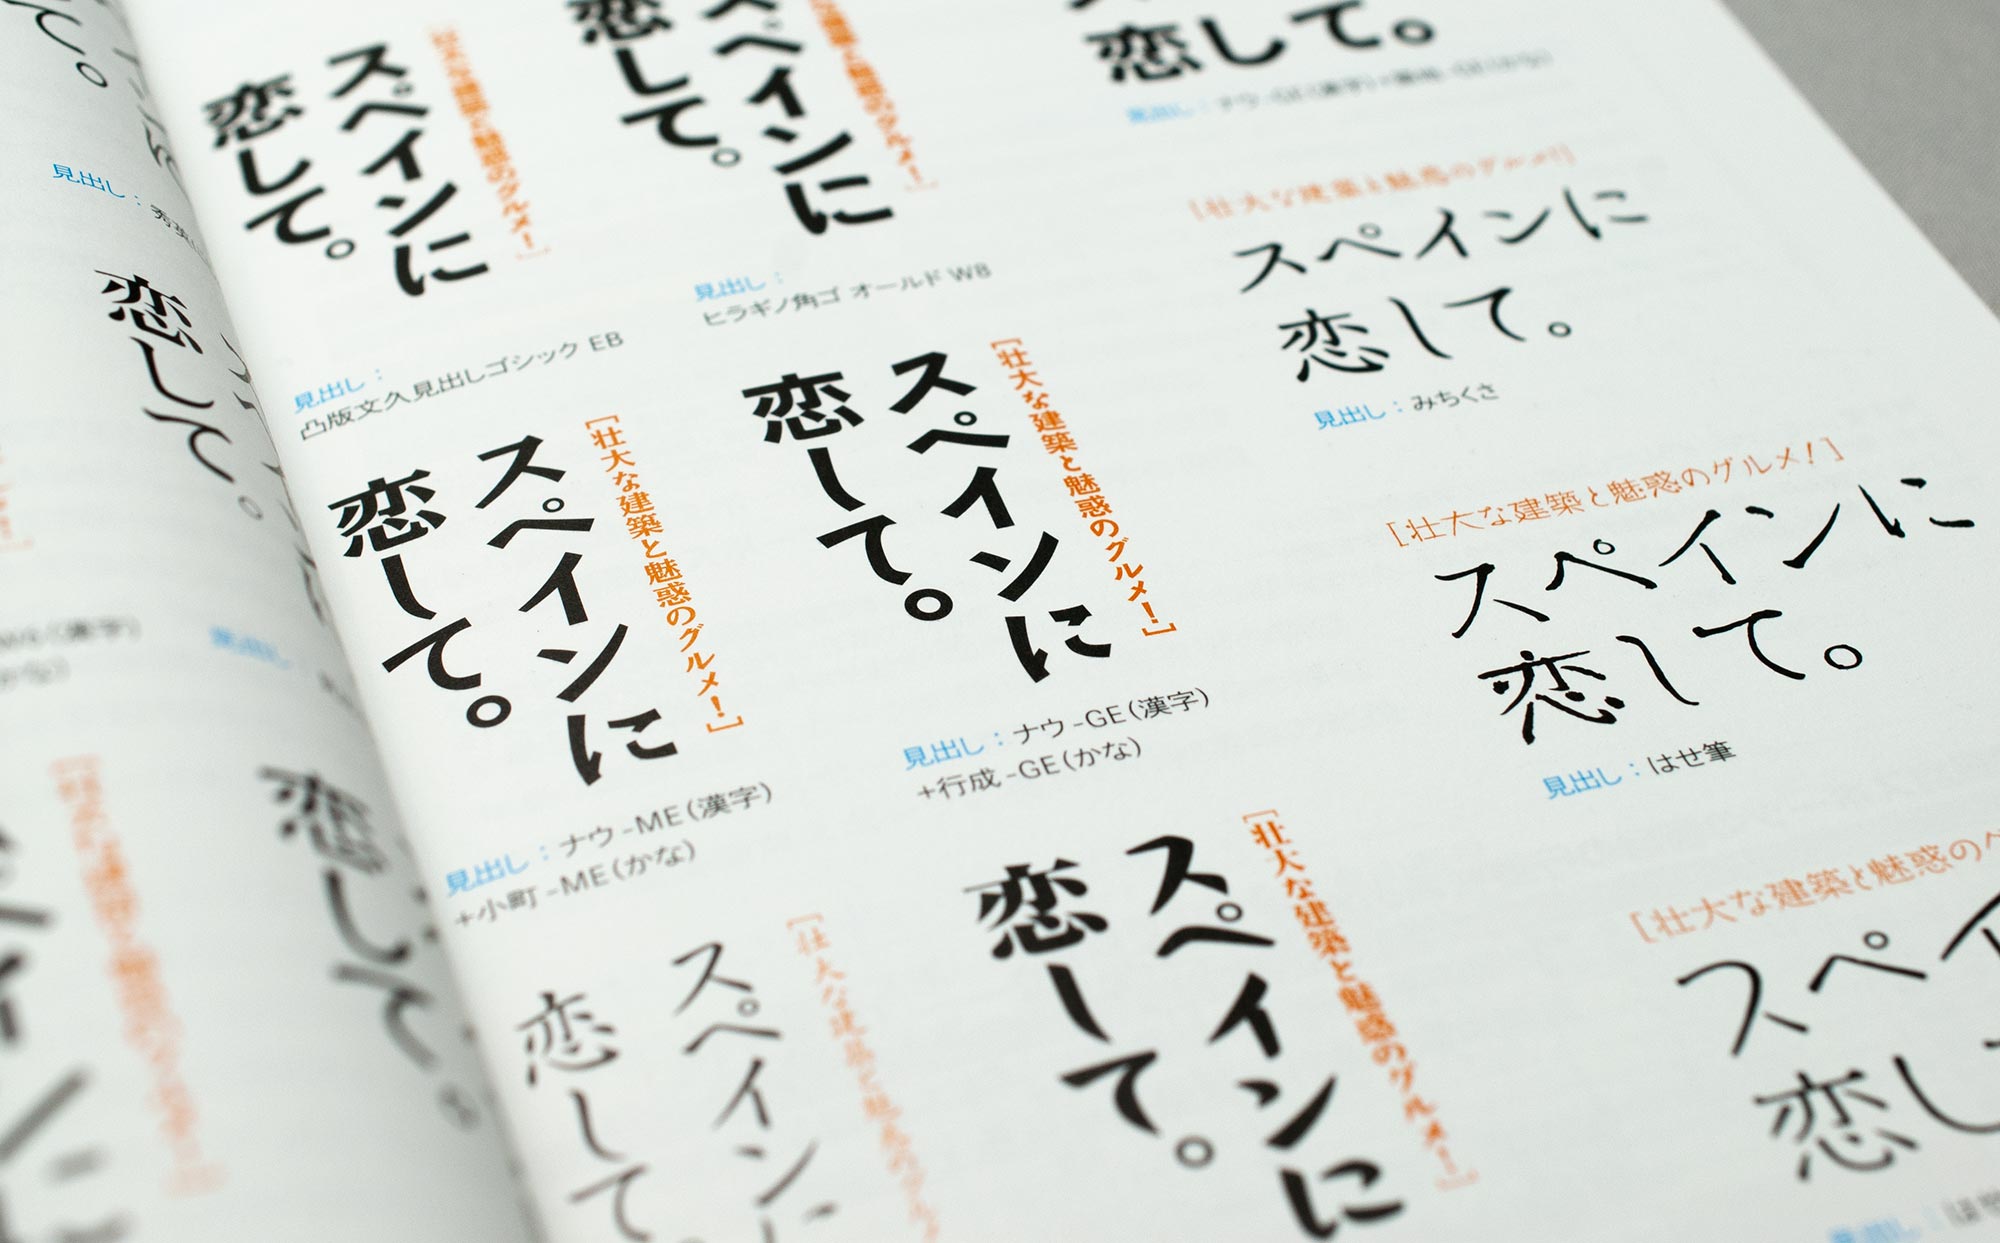 verschiedene japanische Schriftarten